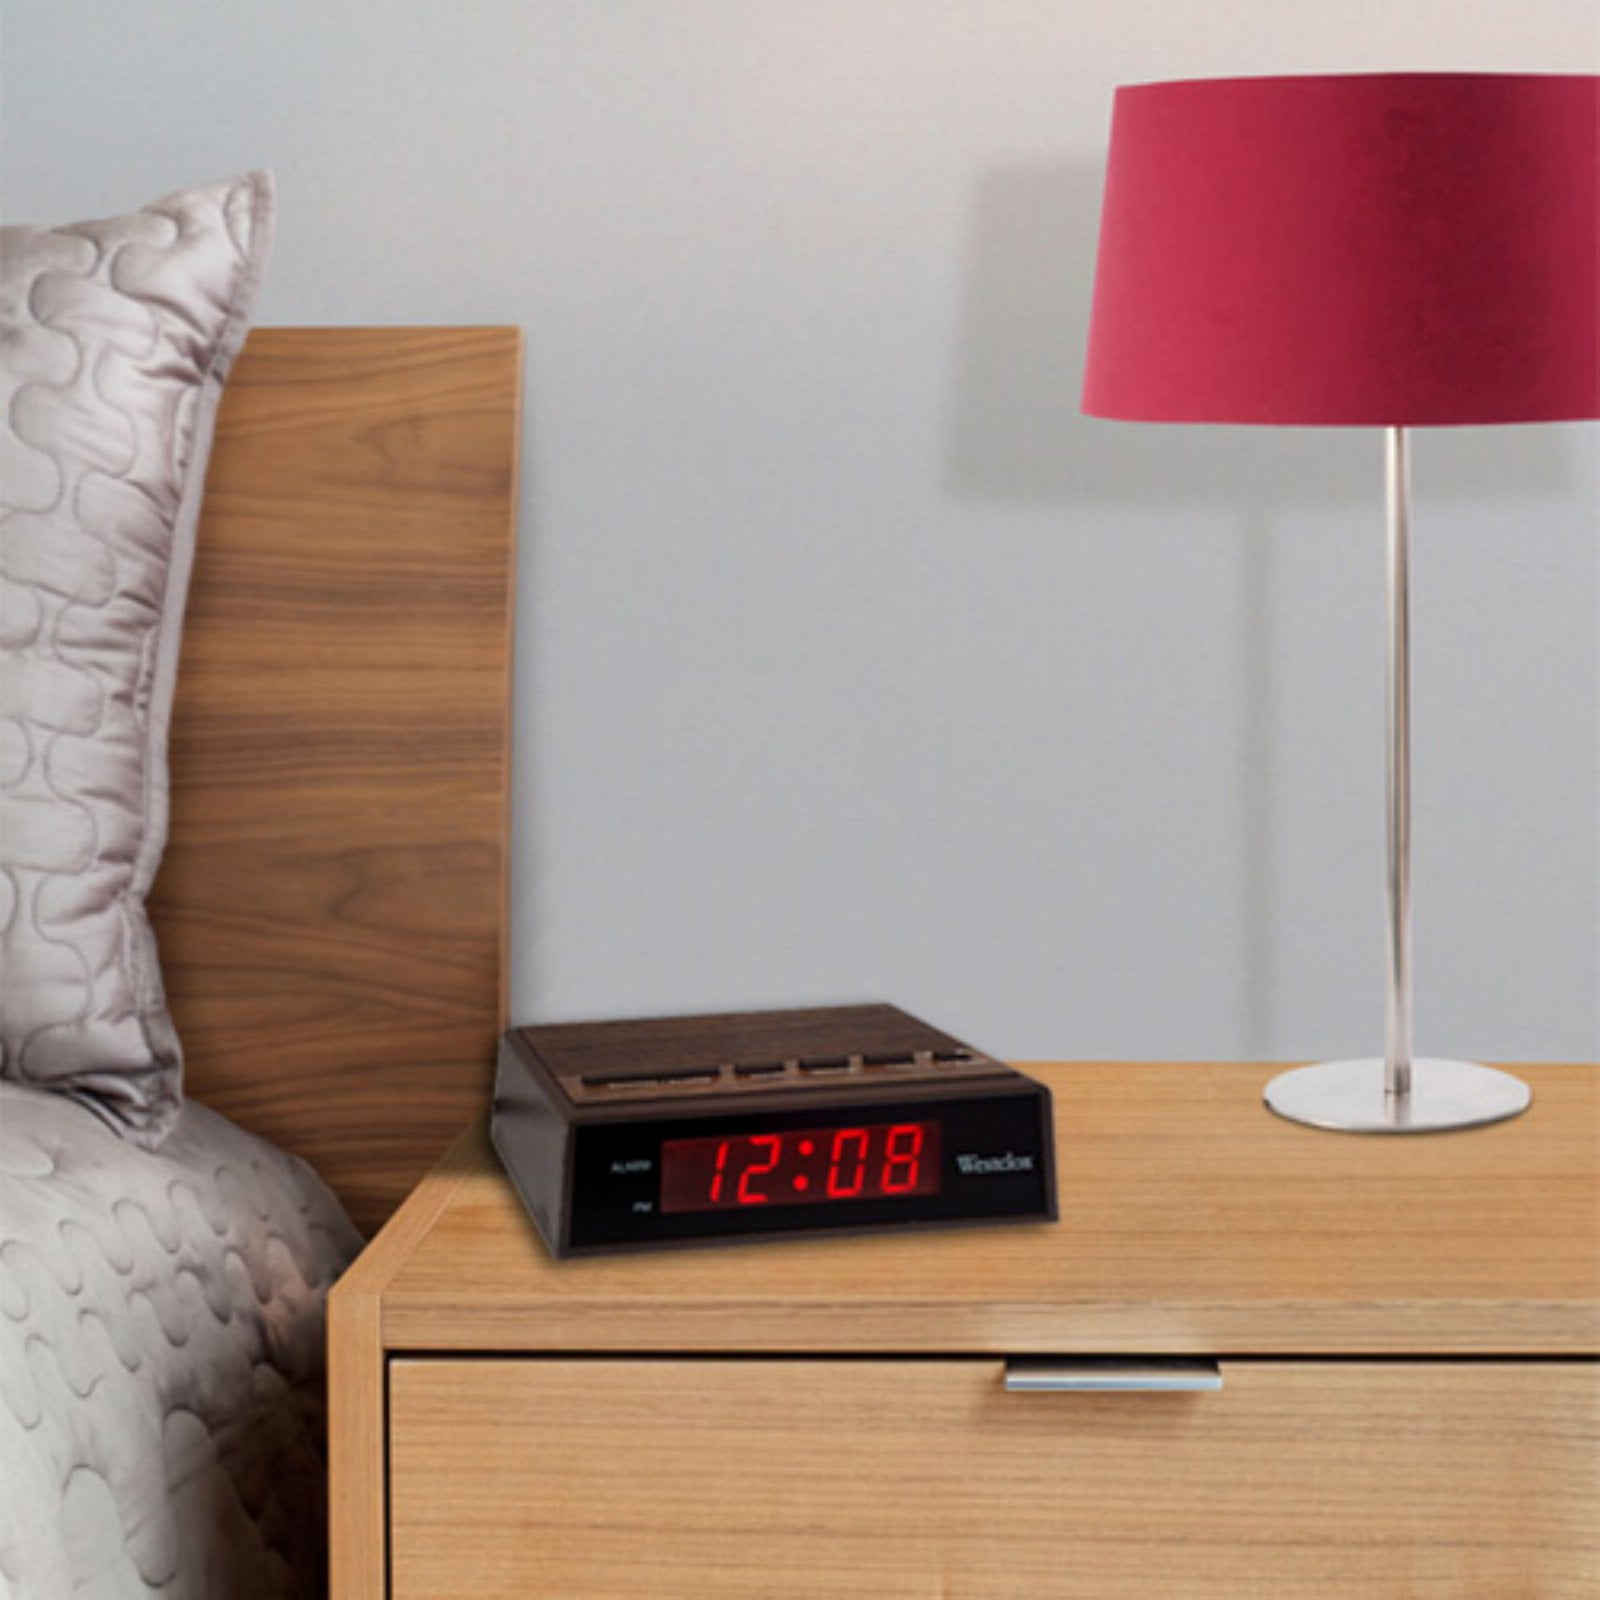 Westclox LED Electric Alarm Clock Retro Wood Grain Appearance Battery Backup 